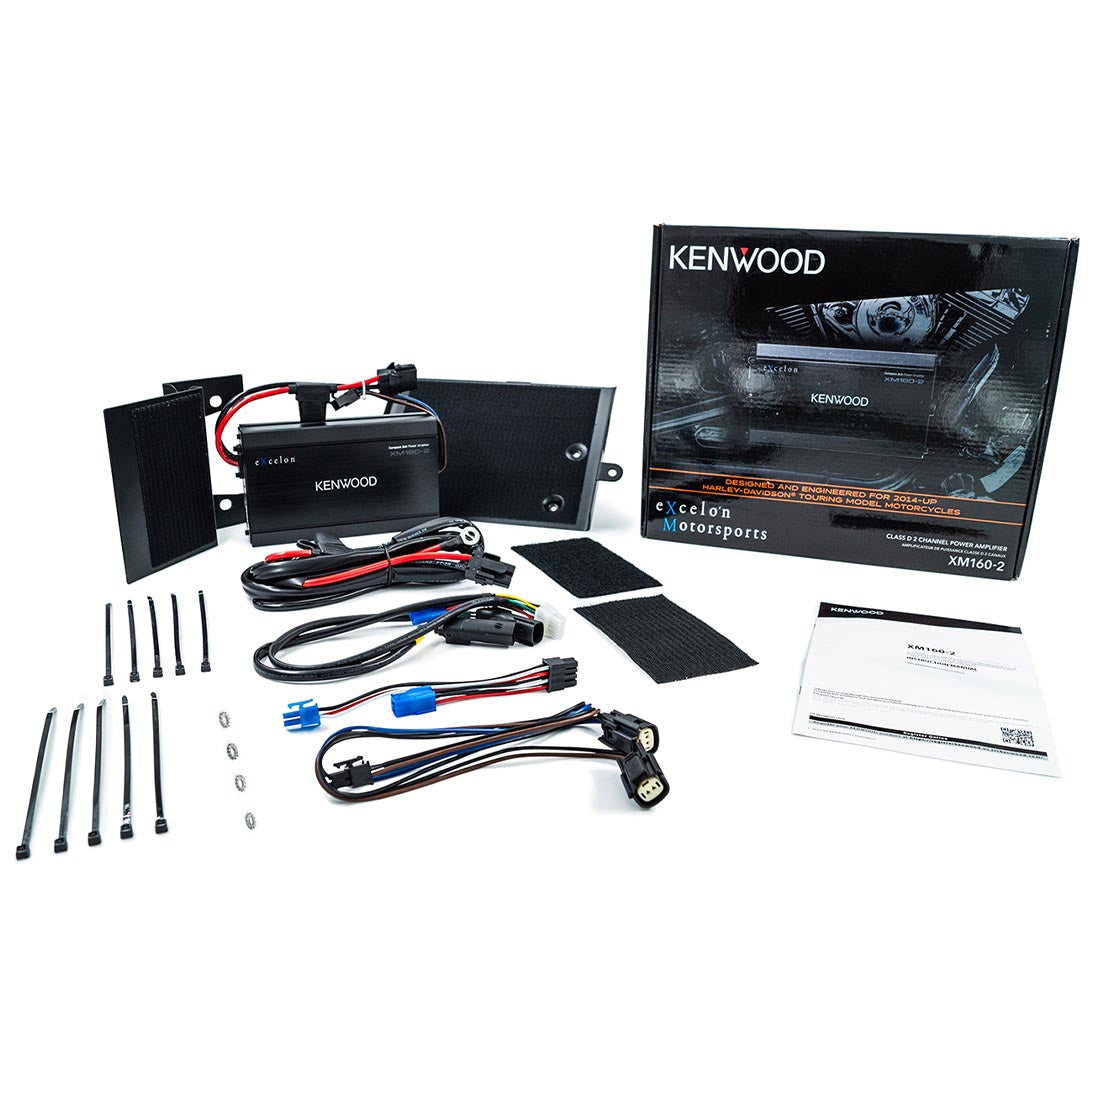 Kenwood XM160-2 All 3